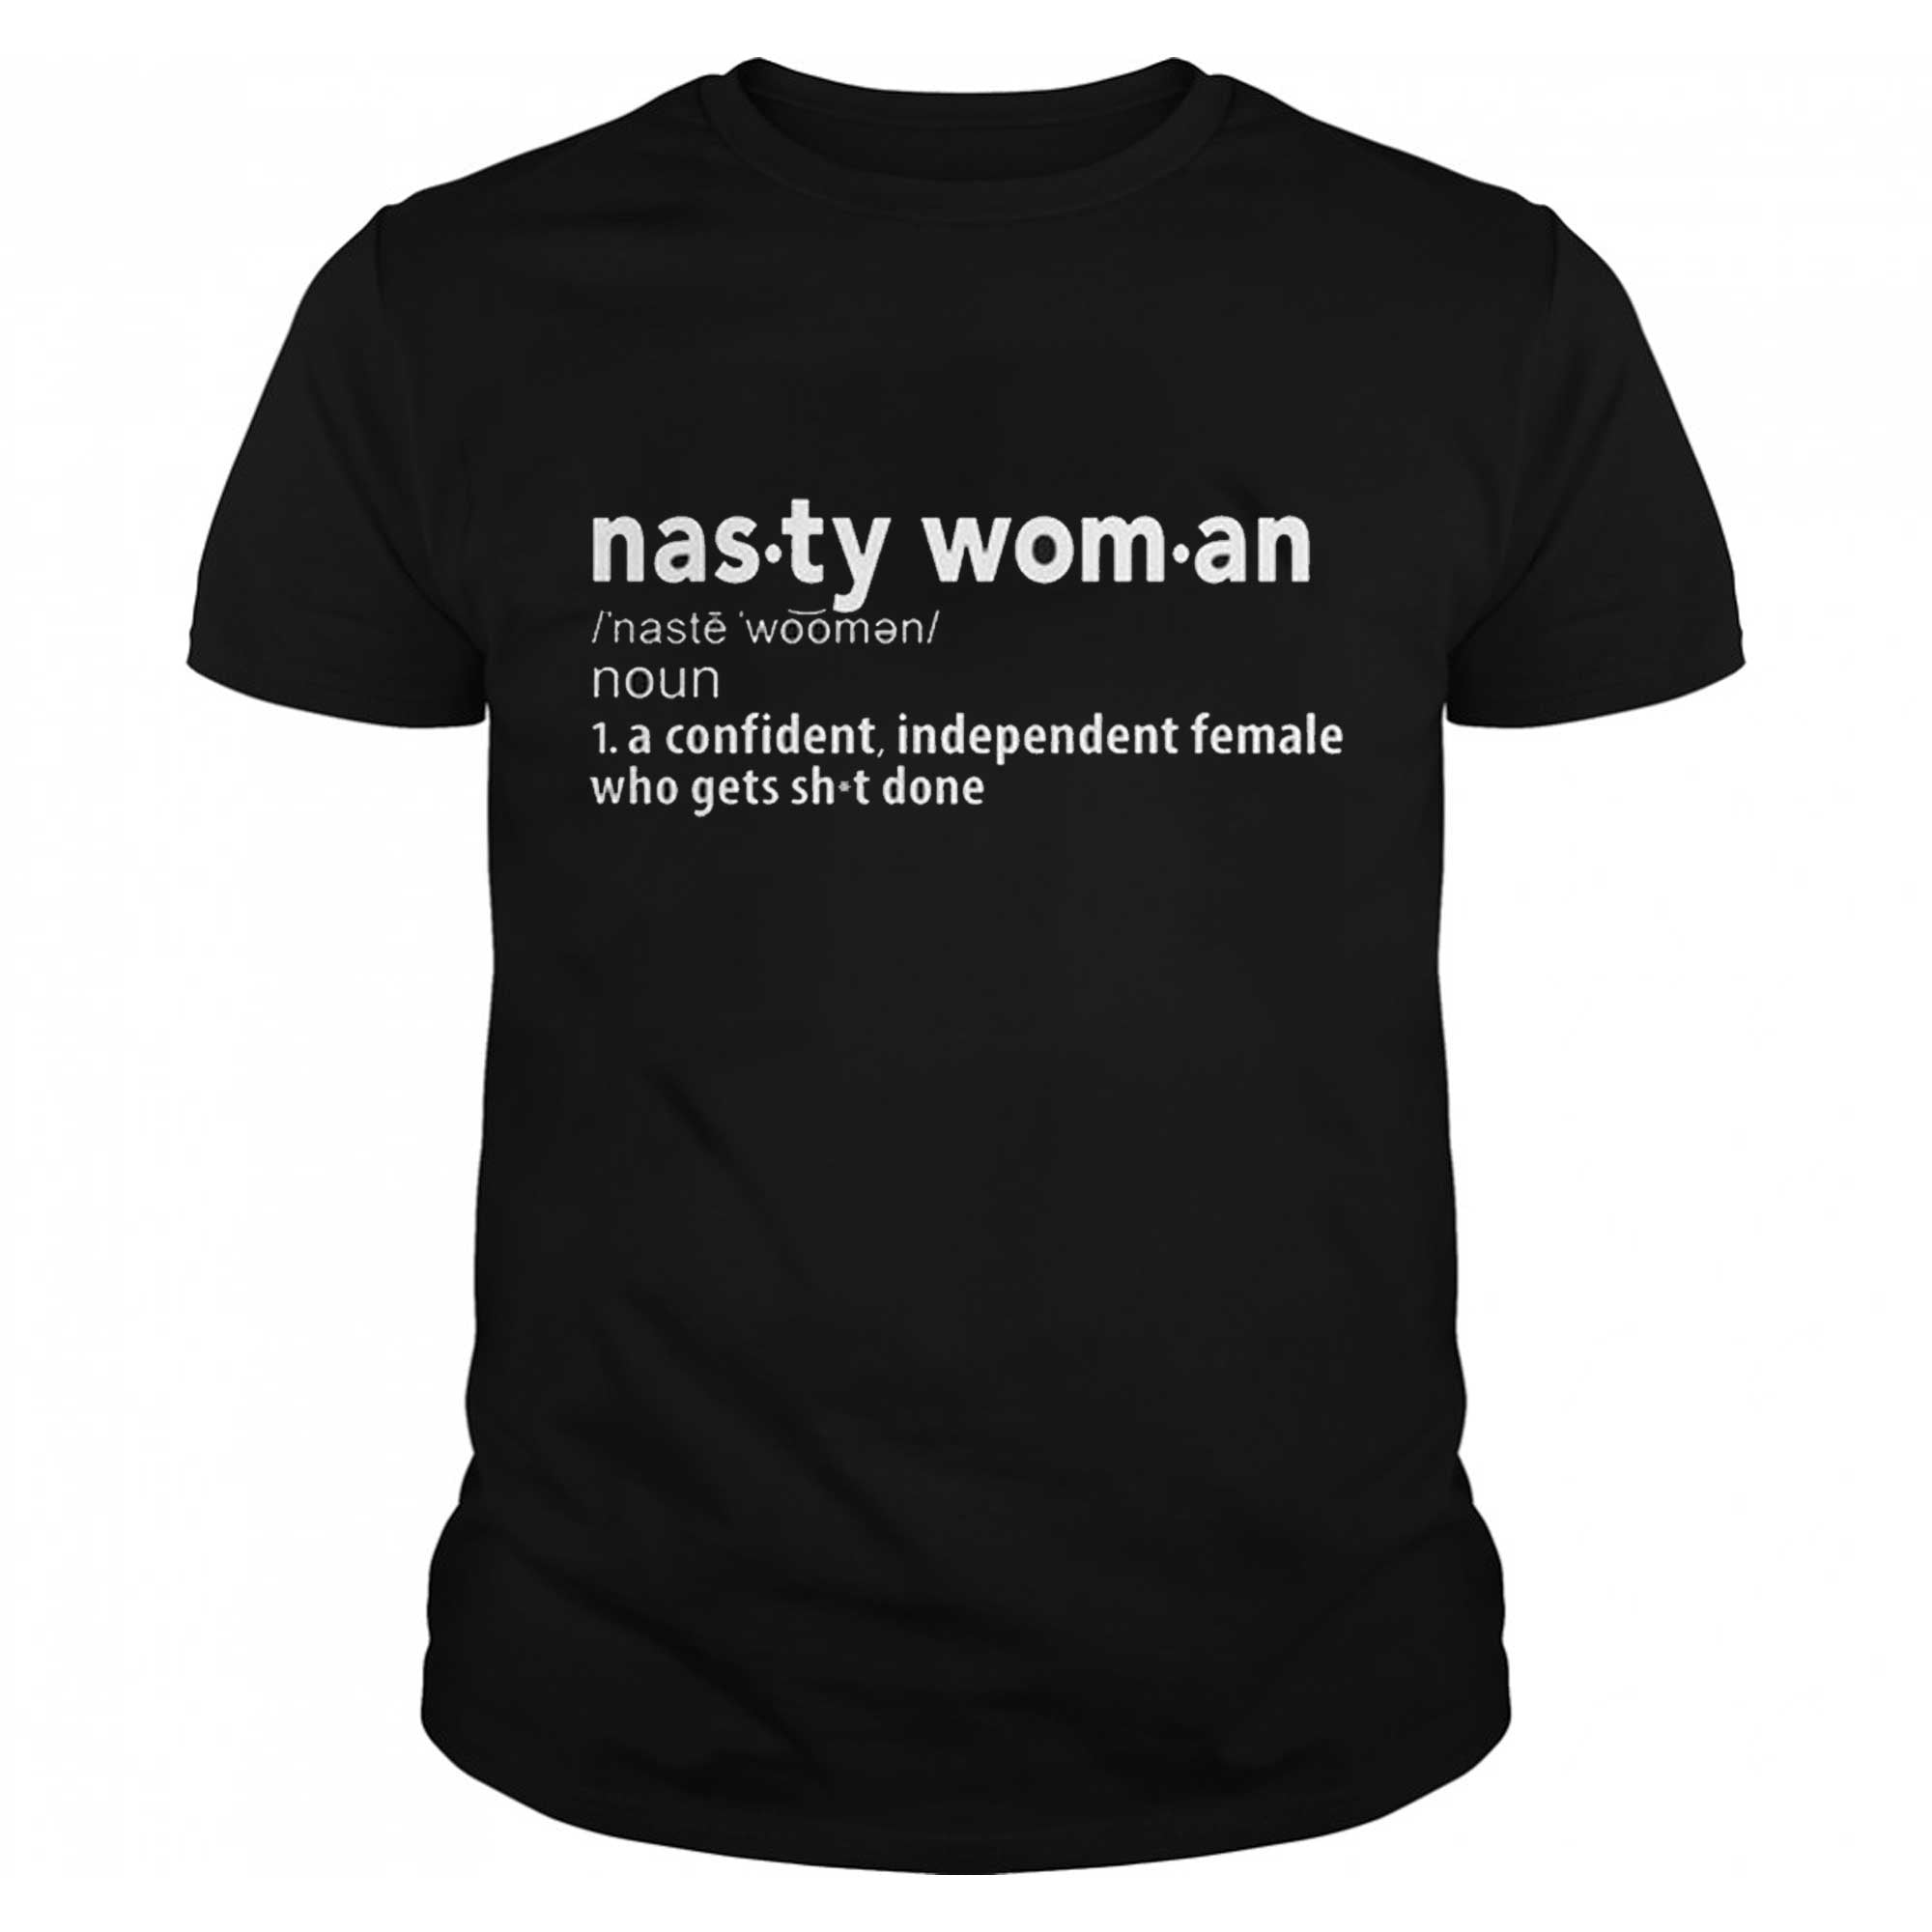 Skitongift-Nasty-Woman-Definition-Shirt-Feminist-Tee-Shirt-Female-Empowerment-Gift-Protest-T-Shirt-Feminism-Top-Funny-Shirts-Long-Sleeve-Tee